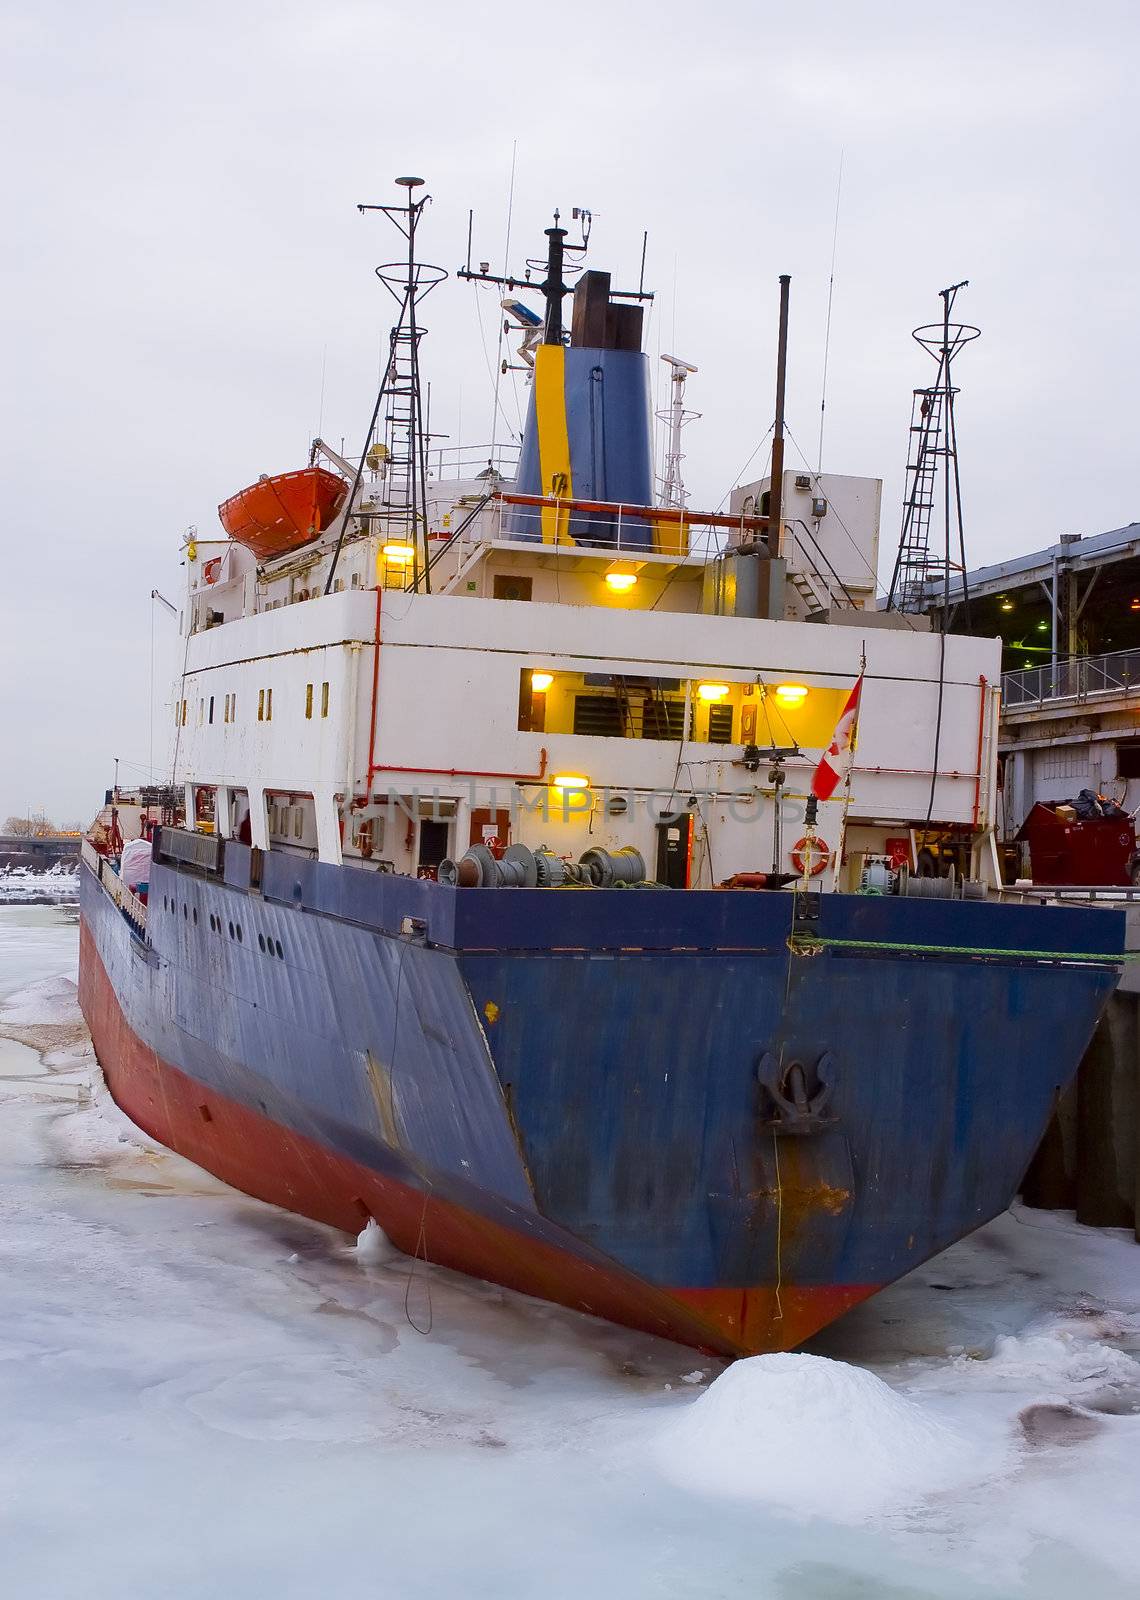 a rusty cargo ship prisoner of ice